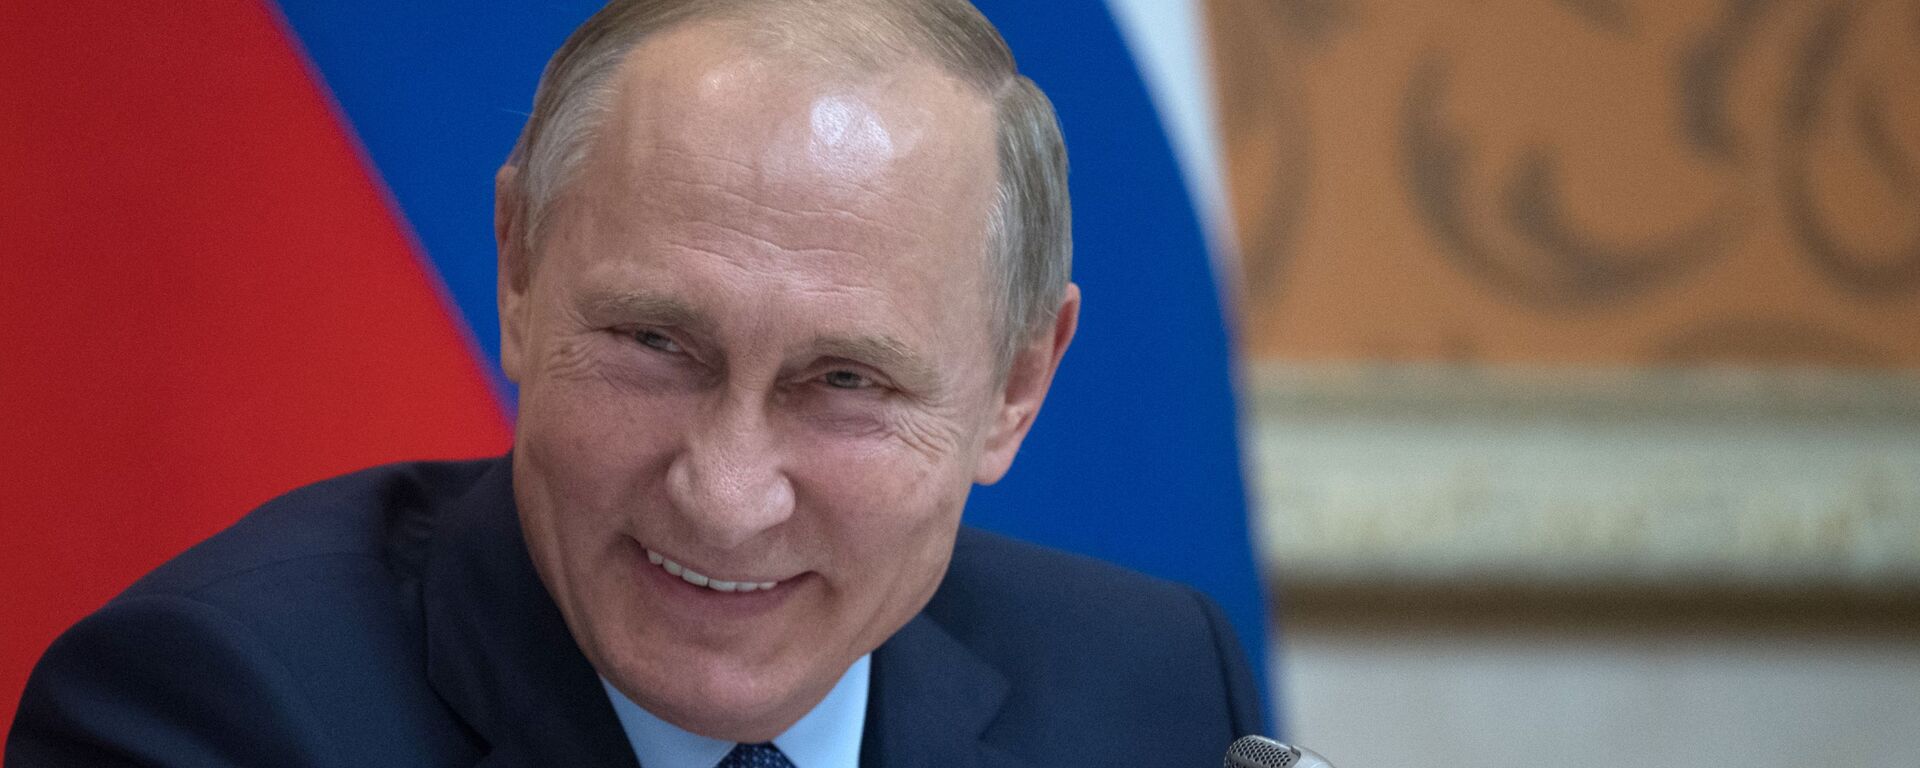 Ông Putin cười  - Sputnik Việt Nam, 1920, 08.10.2021